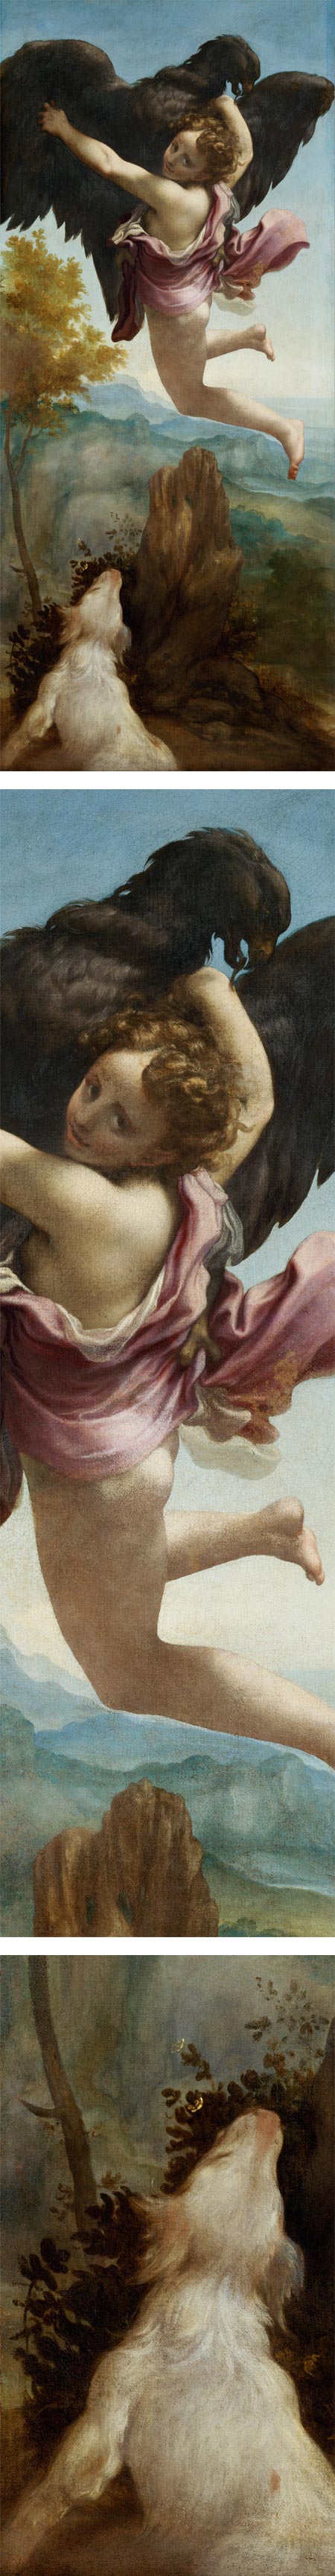 The Abduction of Ganymede</a>, Antonio Allegri, called Correggio”  /><br />
<em><a href=